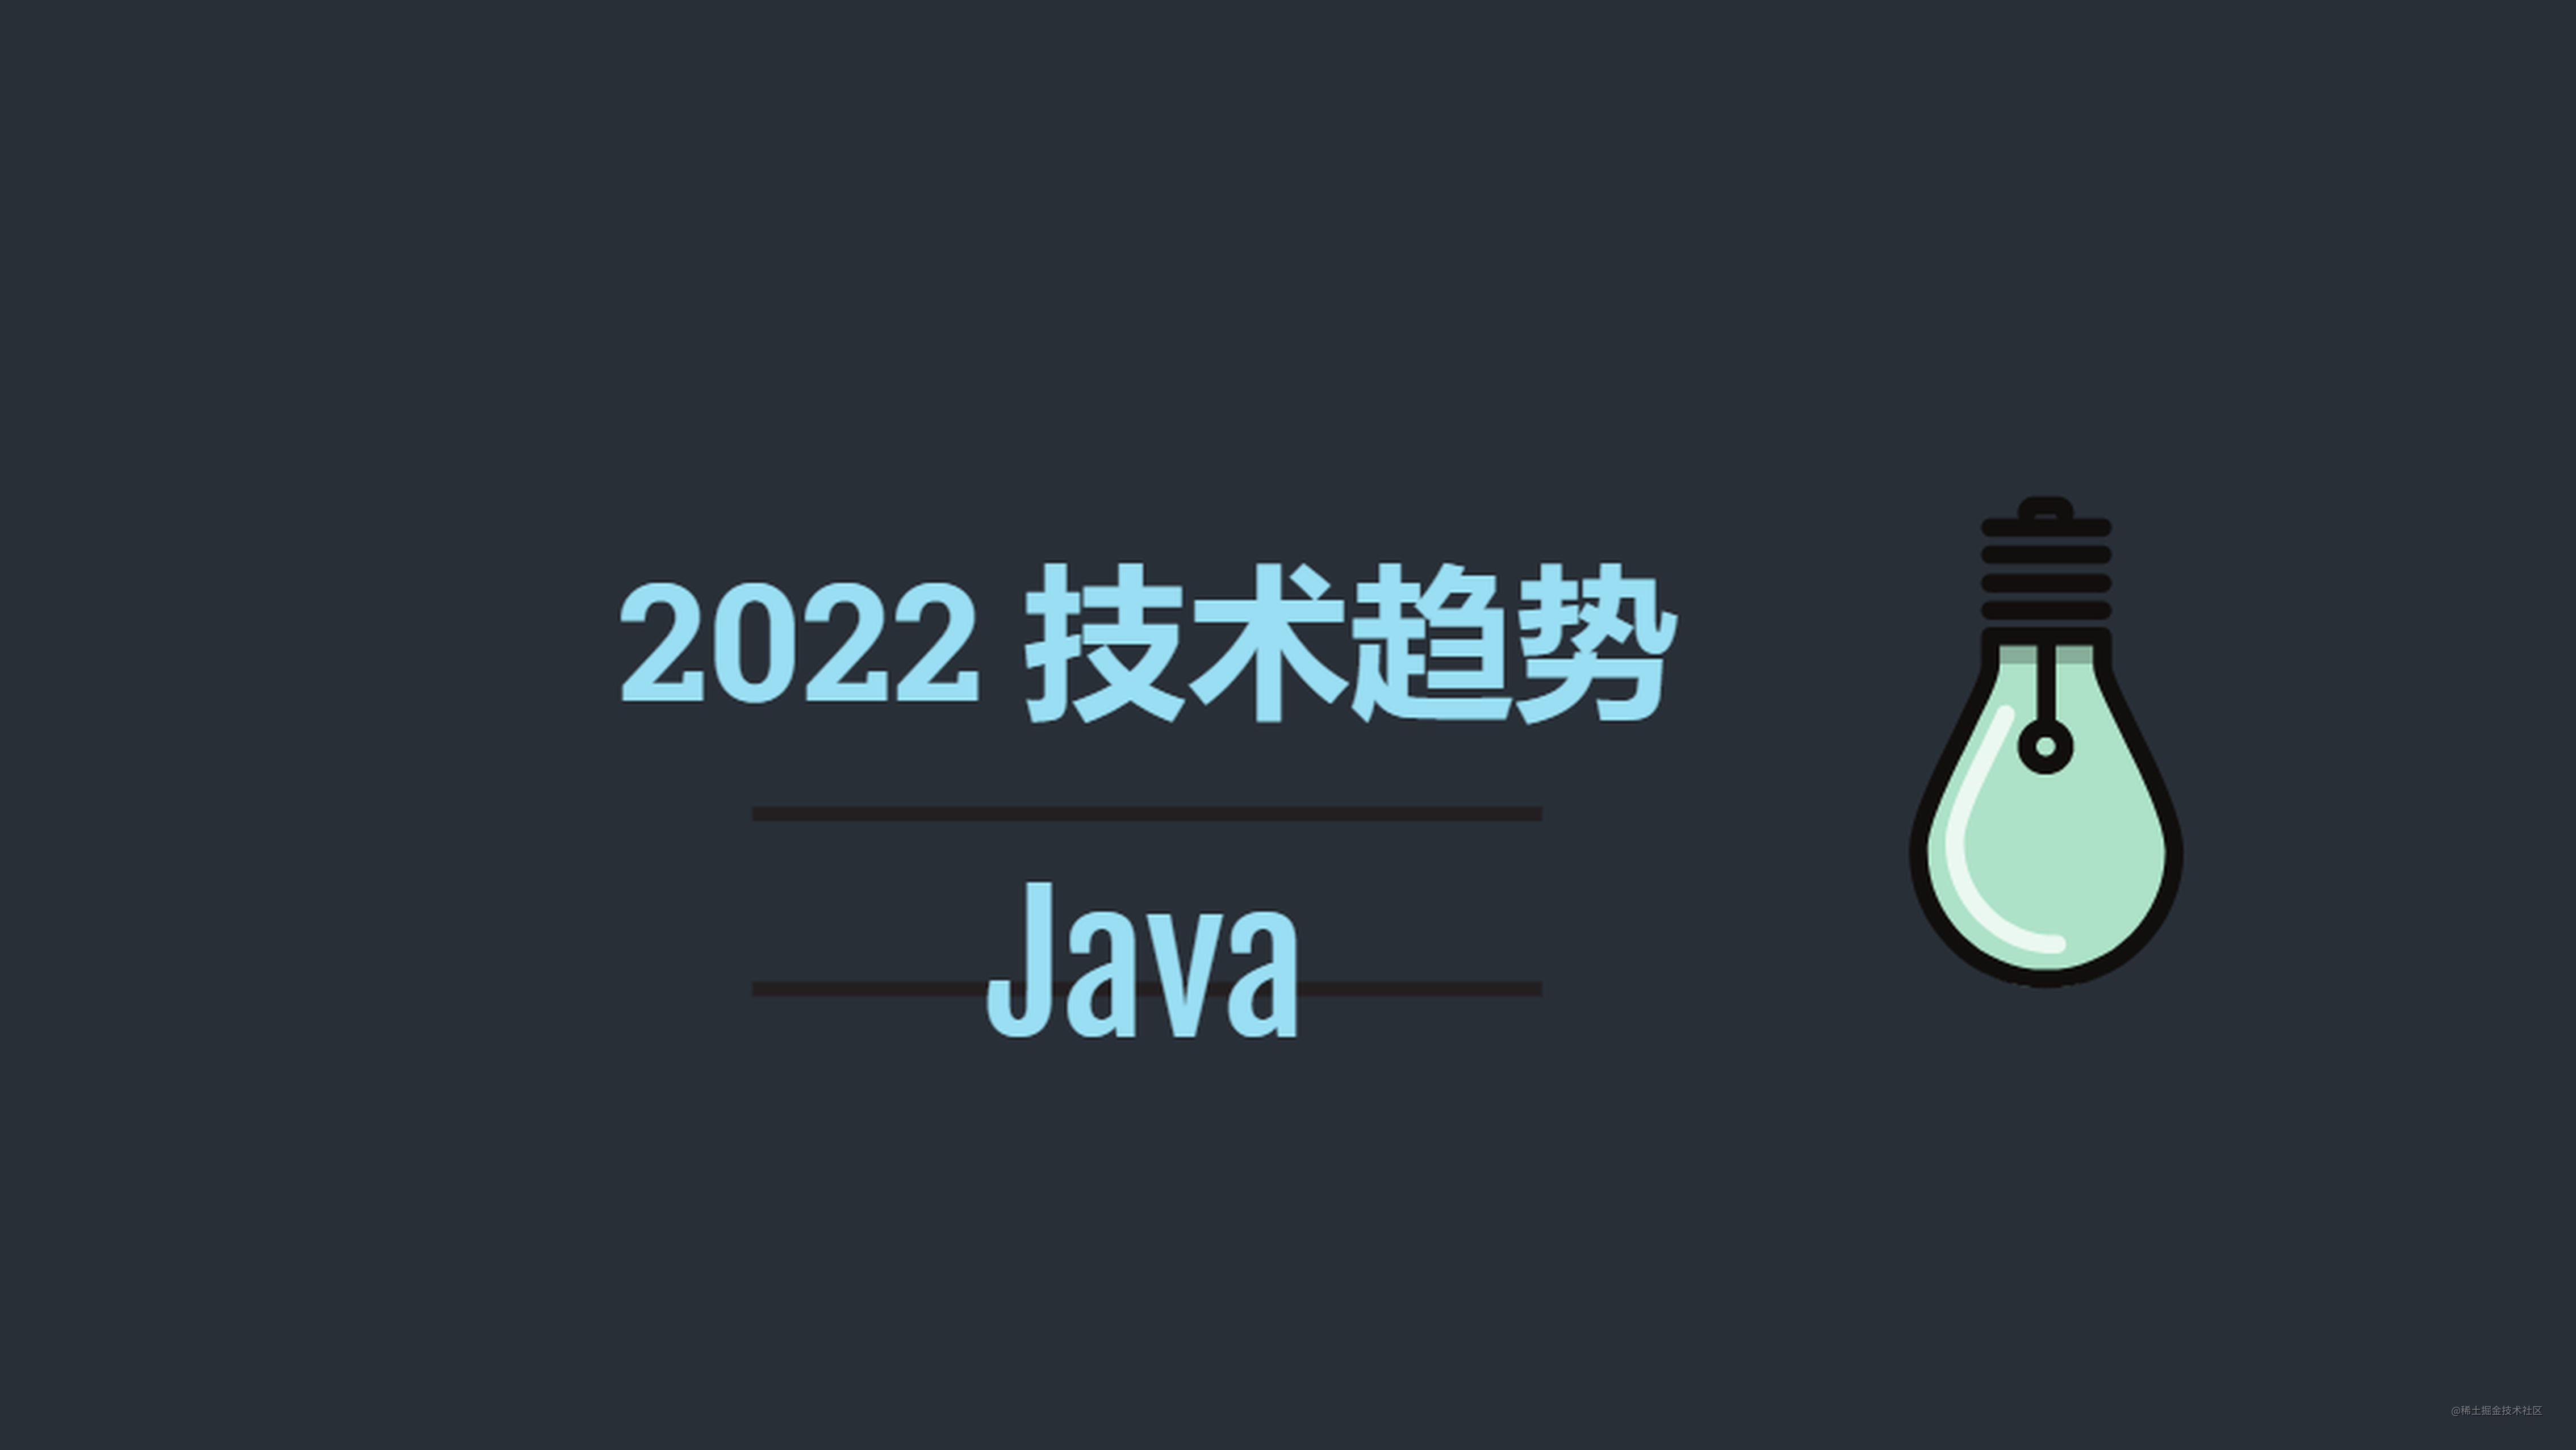 2021-2022 Java 趋势报告